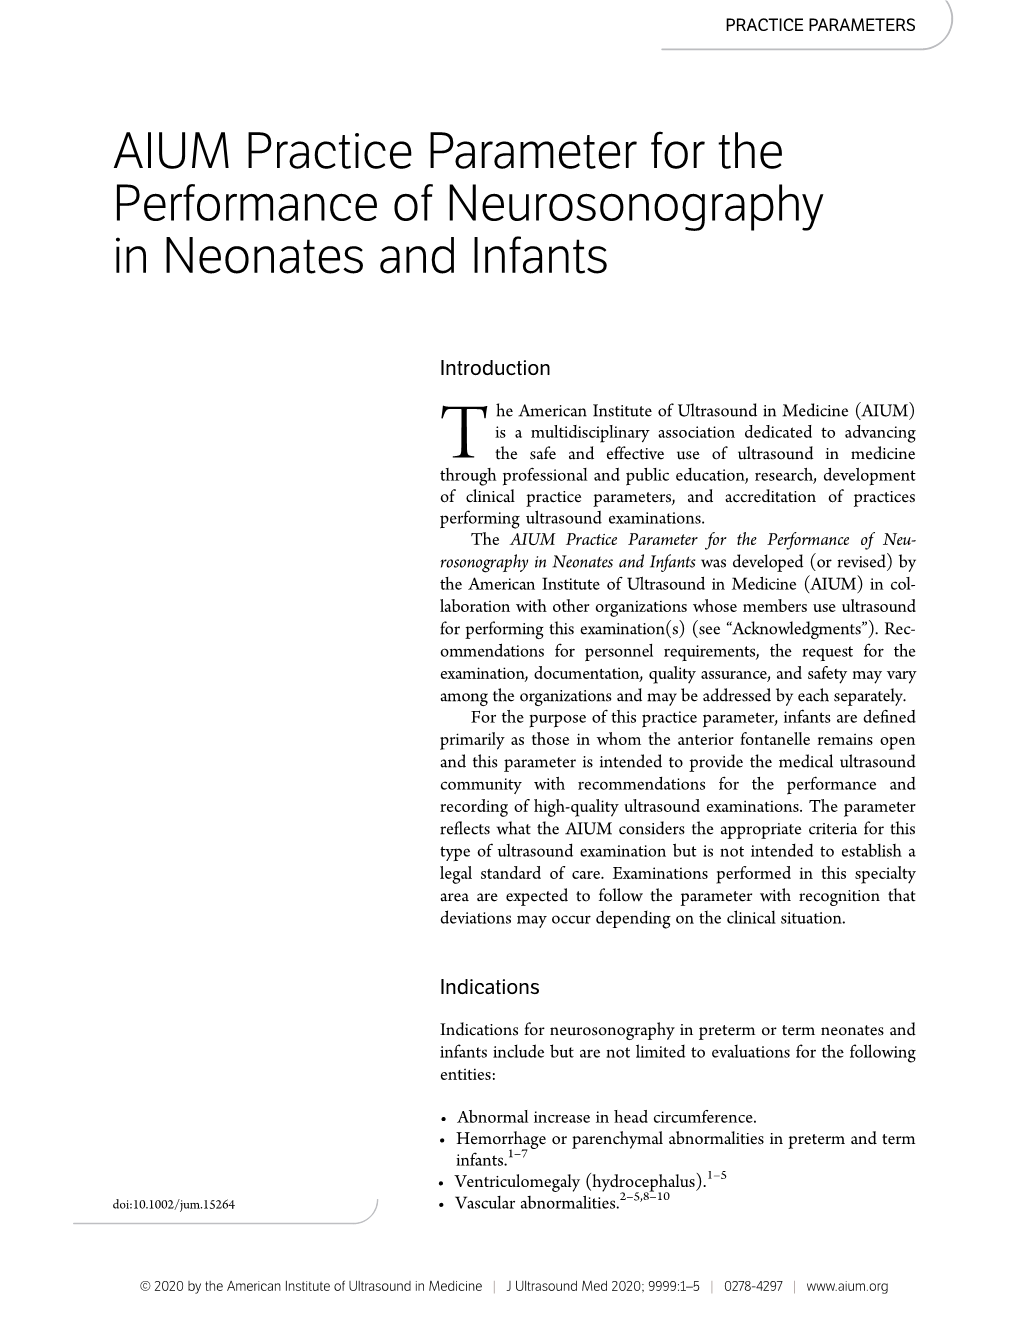 Neurosonography in Neonates and Infants